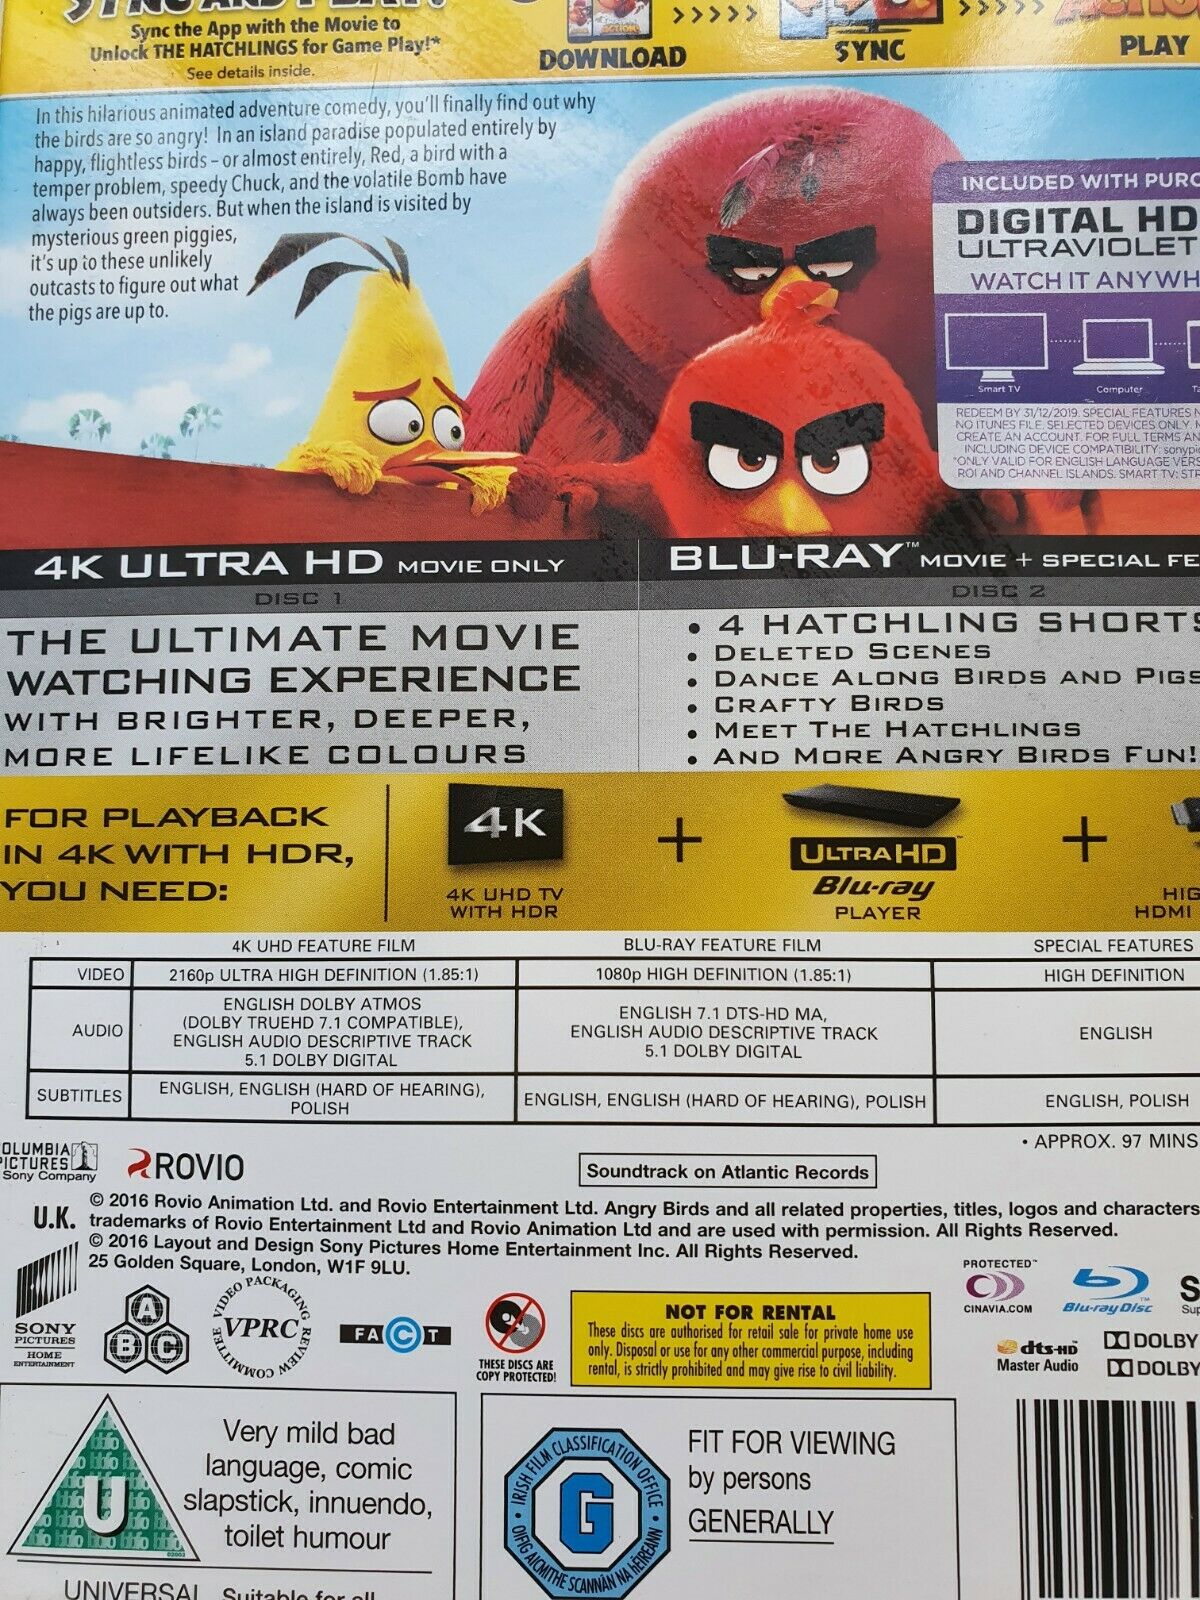 5050630606993 The Angry Birds Movie 4K UHD + Blu-Ray +Digital 2016 C. Kaytis 2 discs LIKE NEW